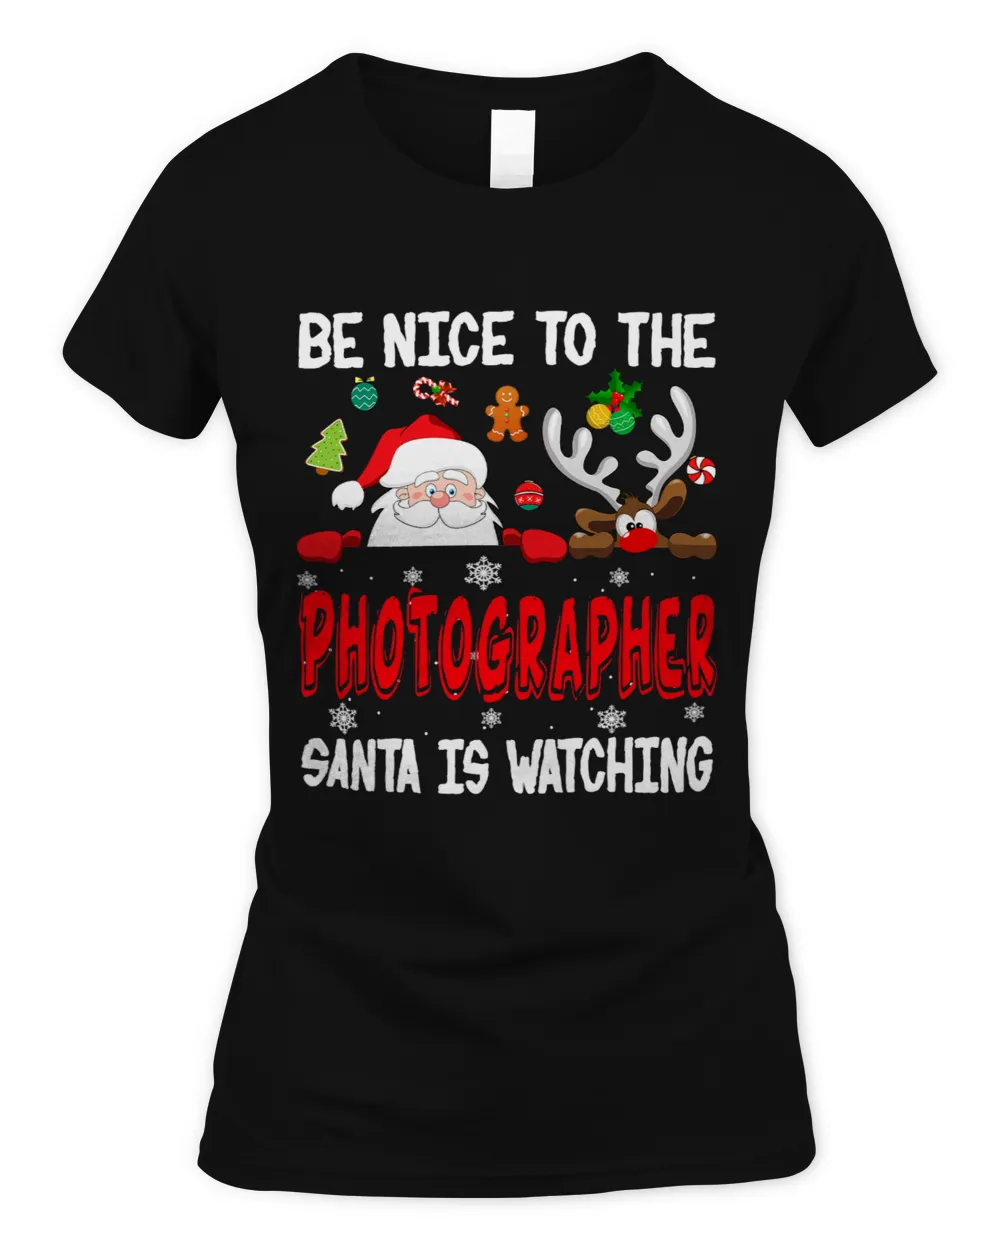 Be Nice To The Photographer Santa Is Watching Santa Reindeer